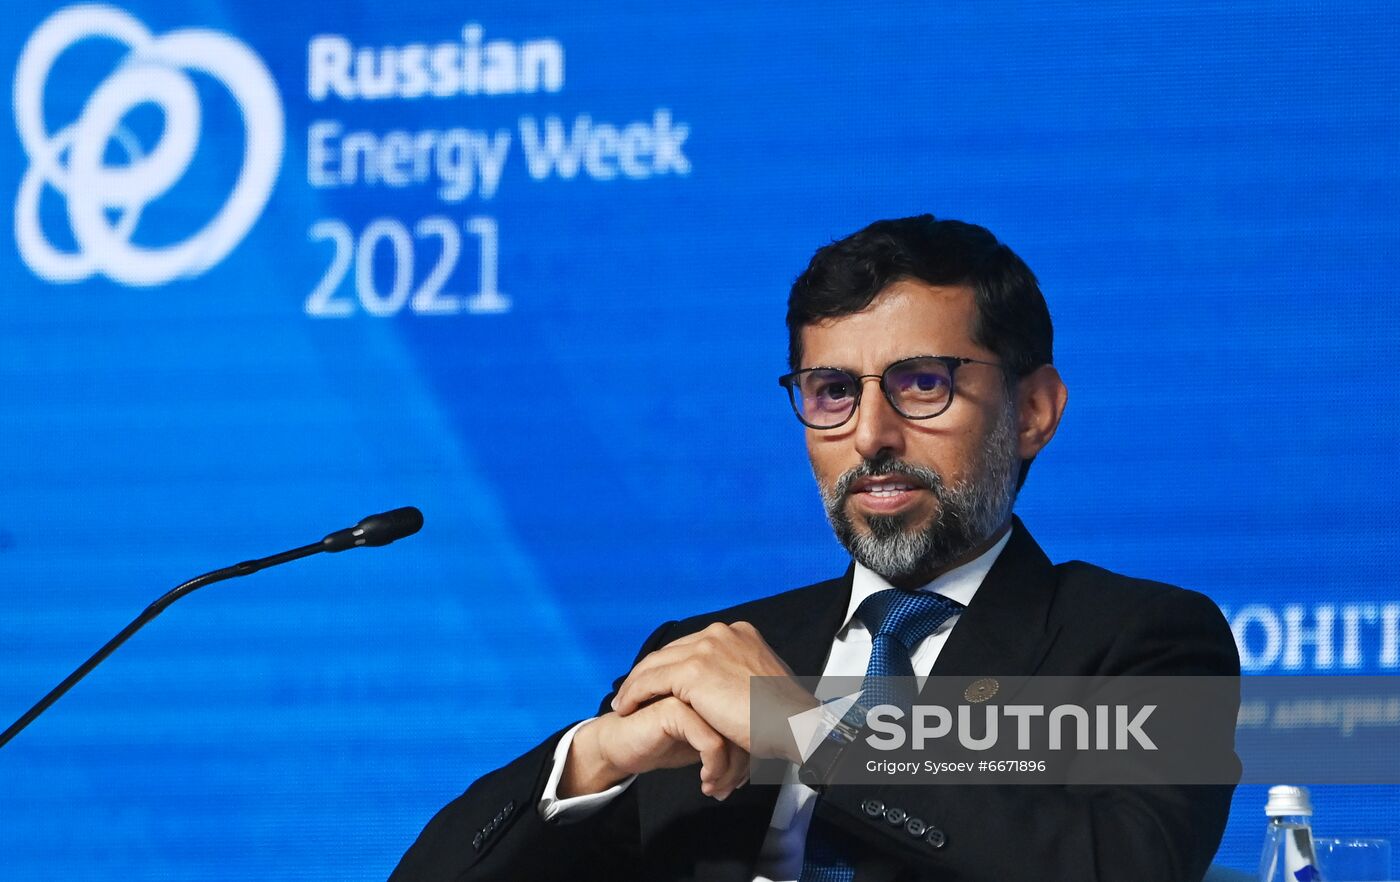 Russia Russian Energy Week